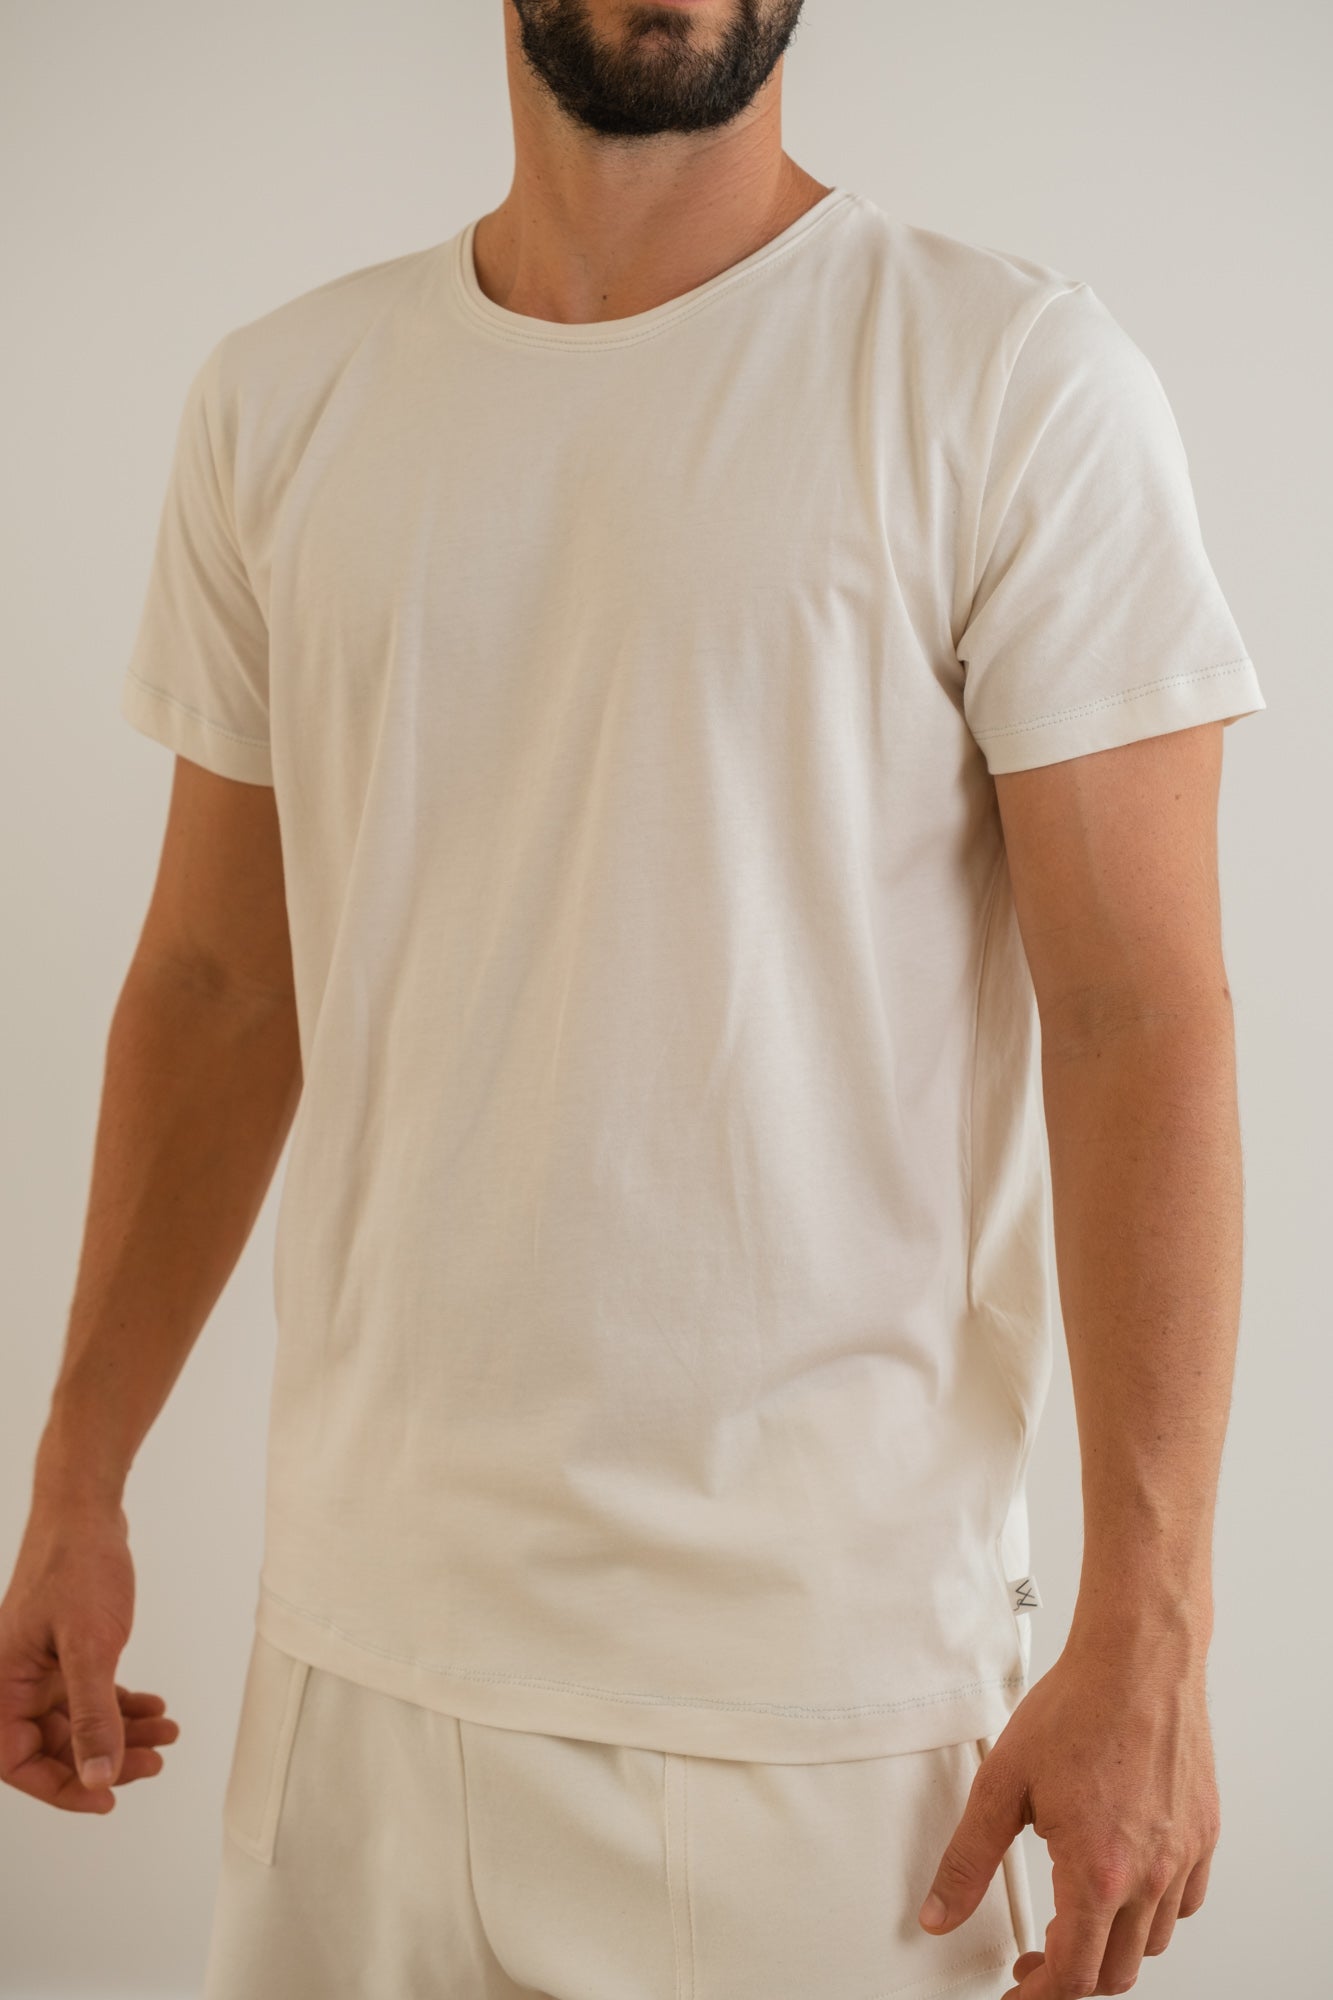 MIA Moda Regenerativa Camisetas XL Camiseta Esencial hombre - natural